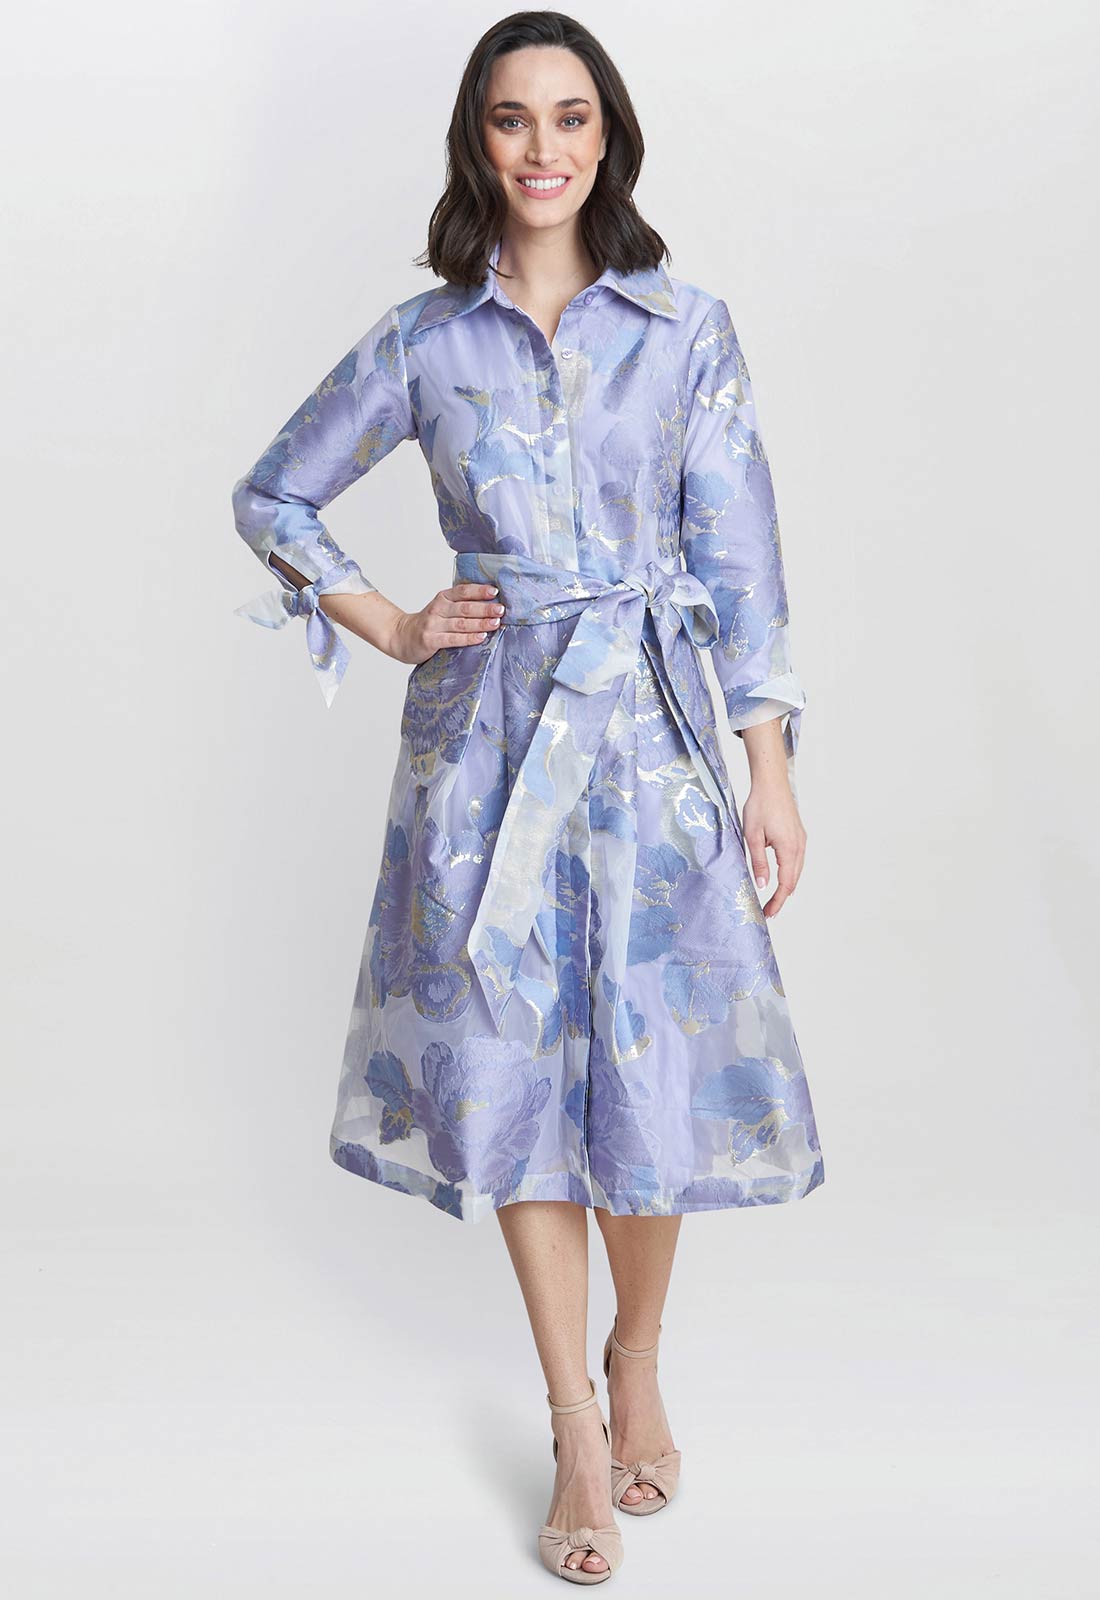 Gina Bacconi Blue Lauren Jacquard Shirt Dress